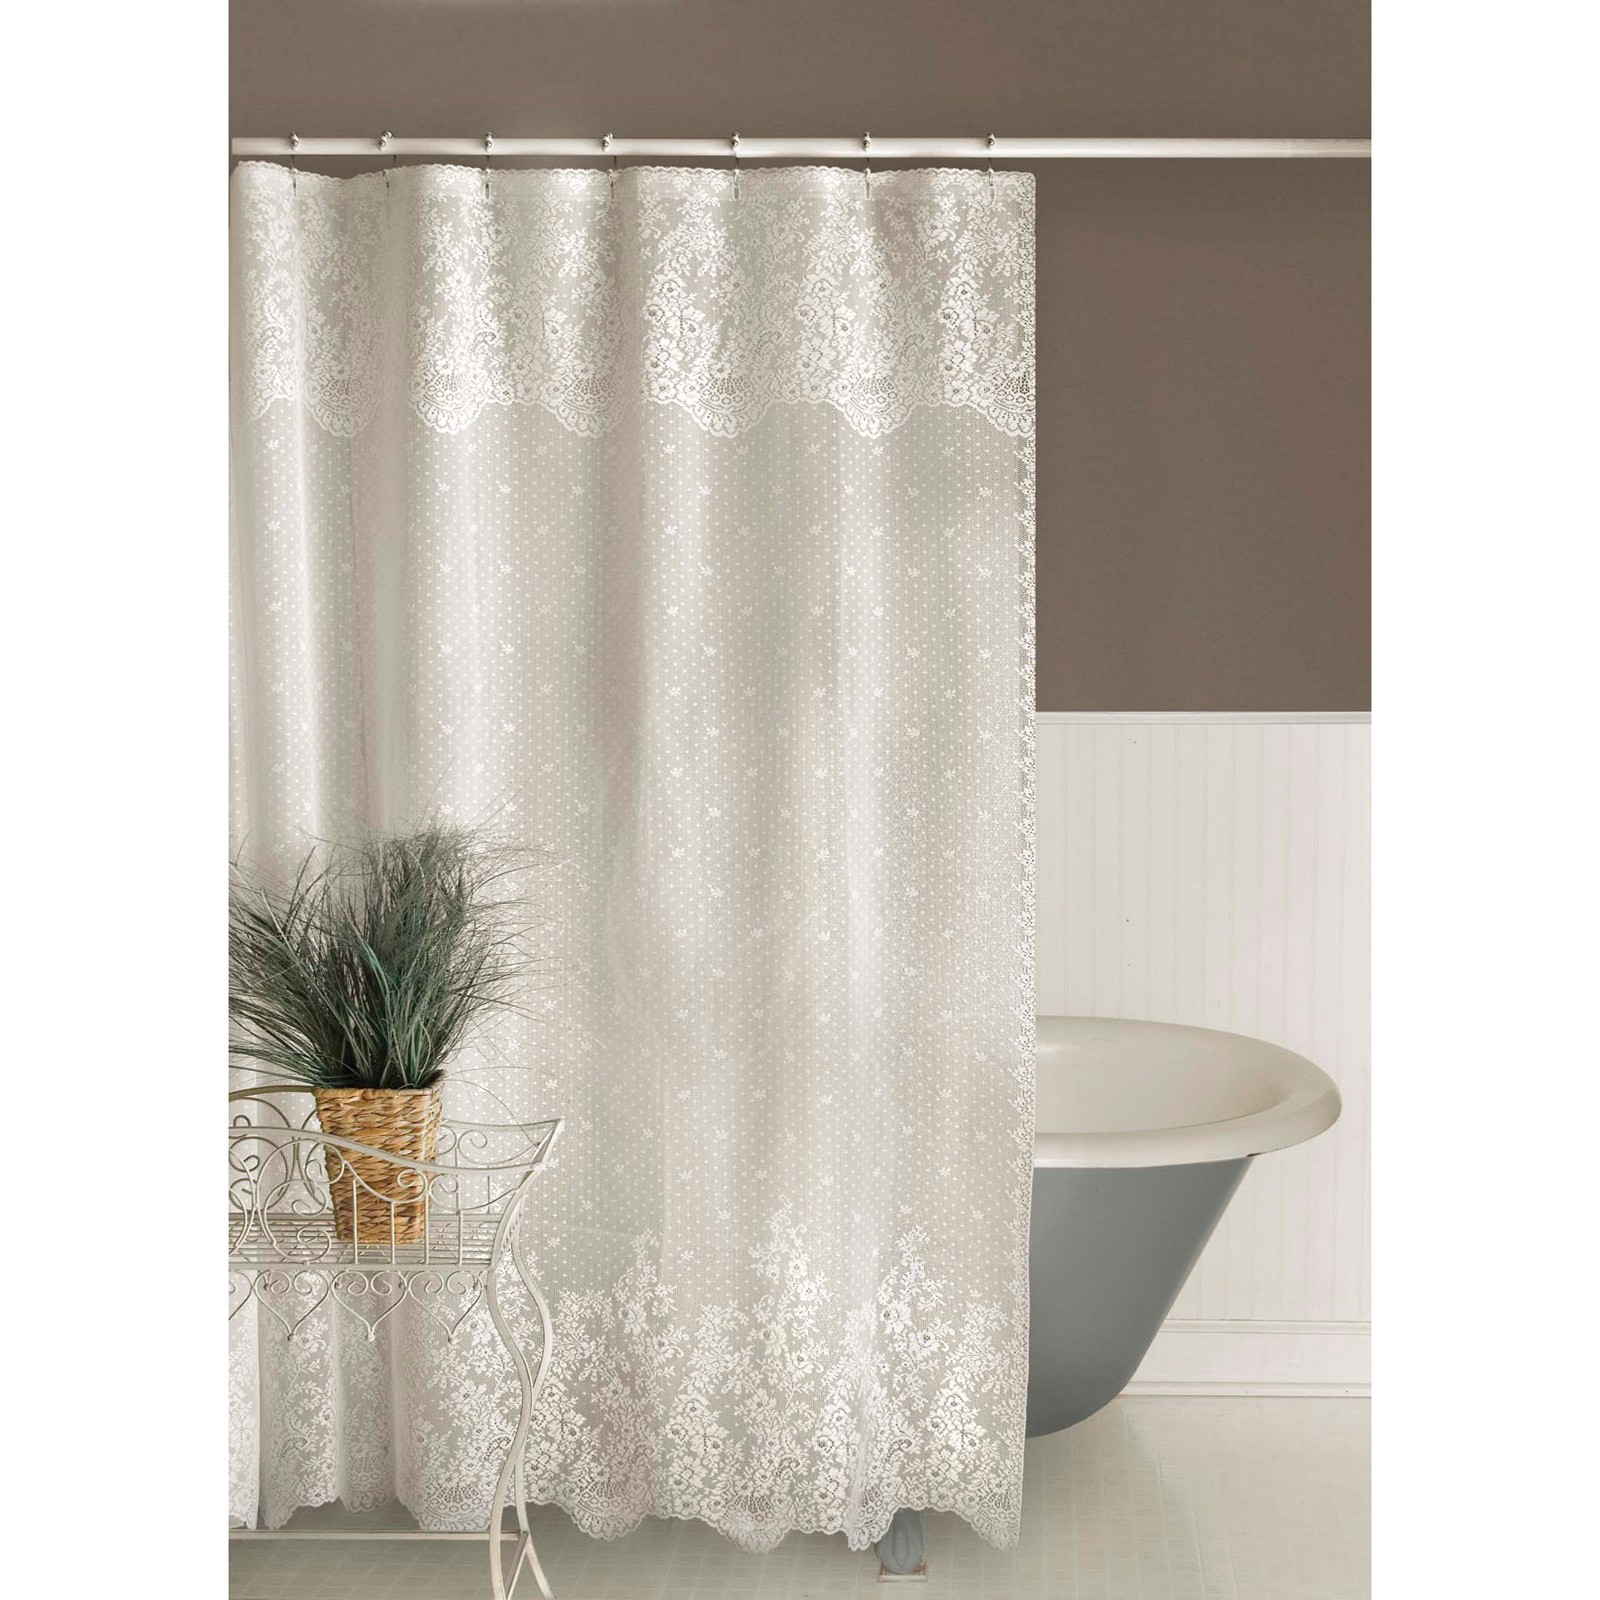 Floret shower curtain 72 x 72 shower curtains at hayneedle